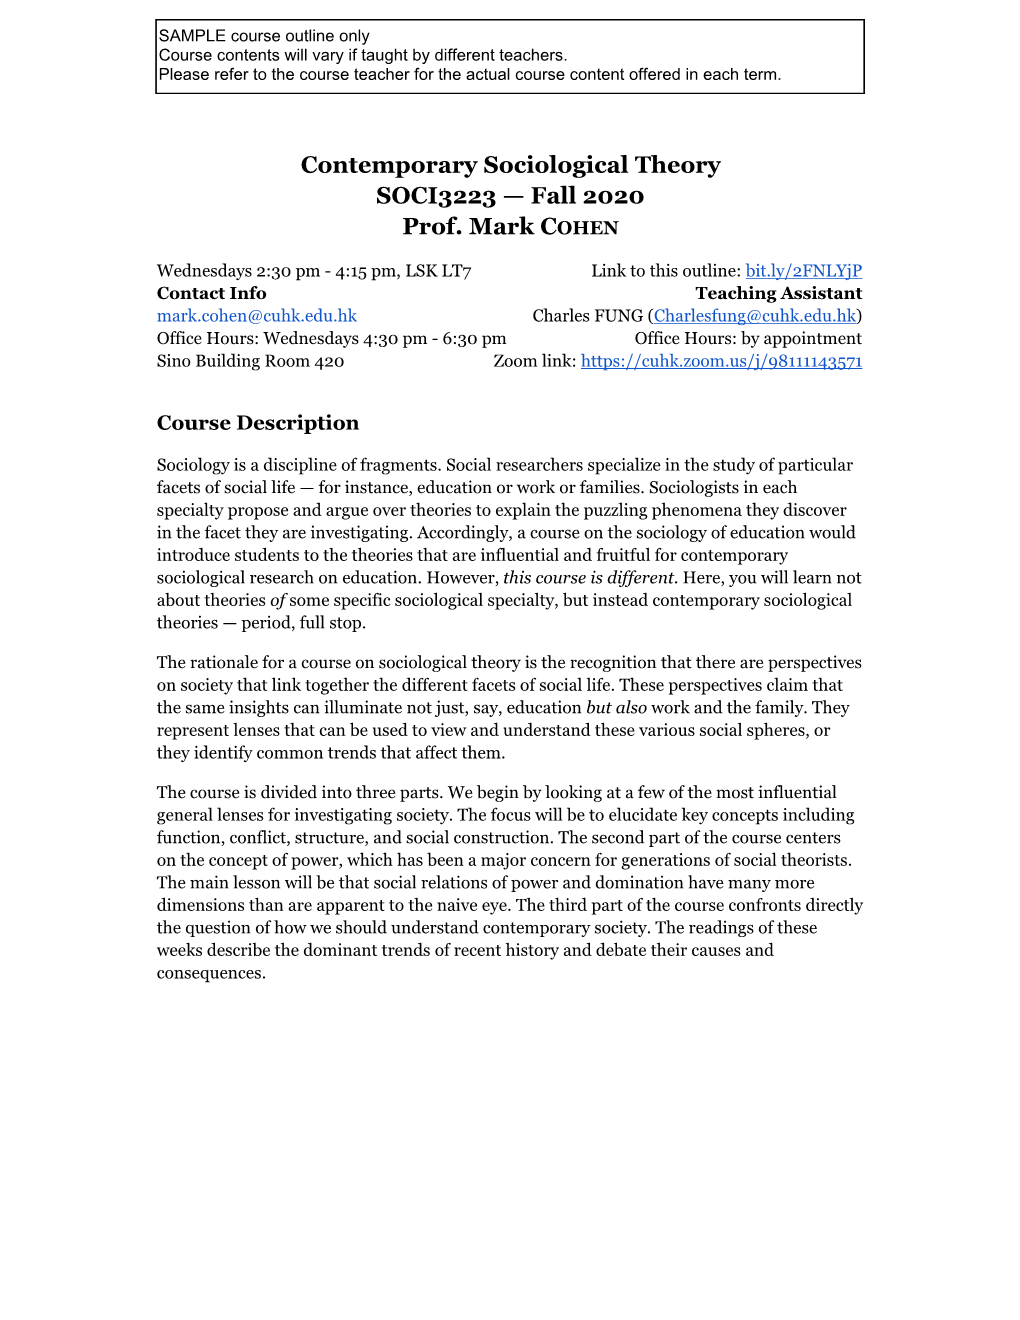 Contemporary Sociological Theory SOCI3223 — Fall 2020 Prof